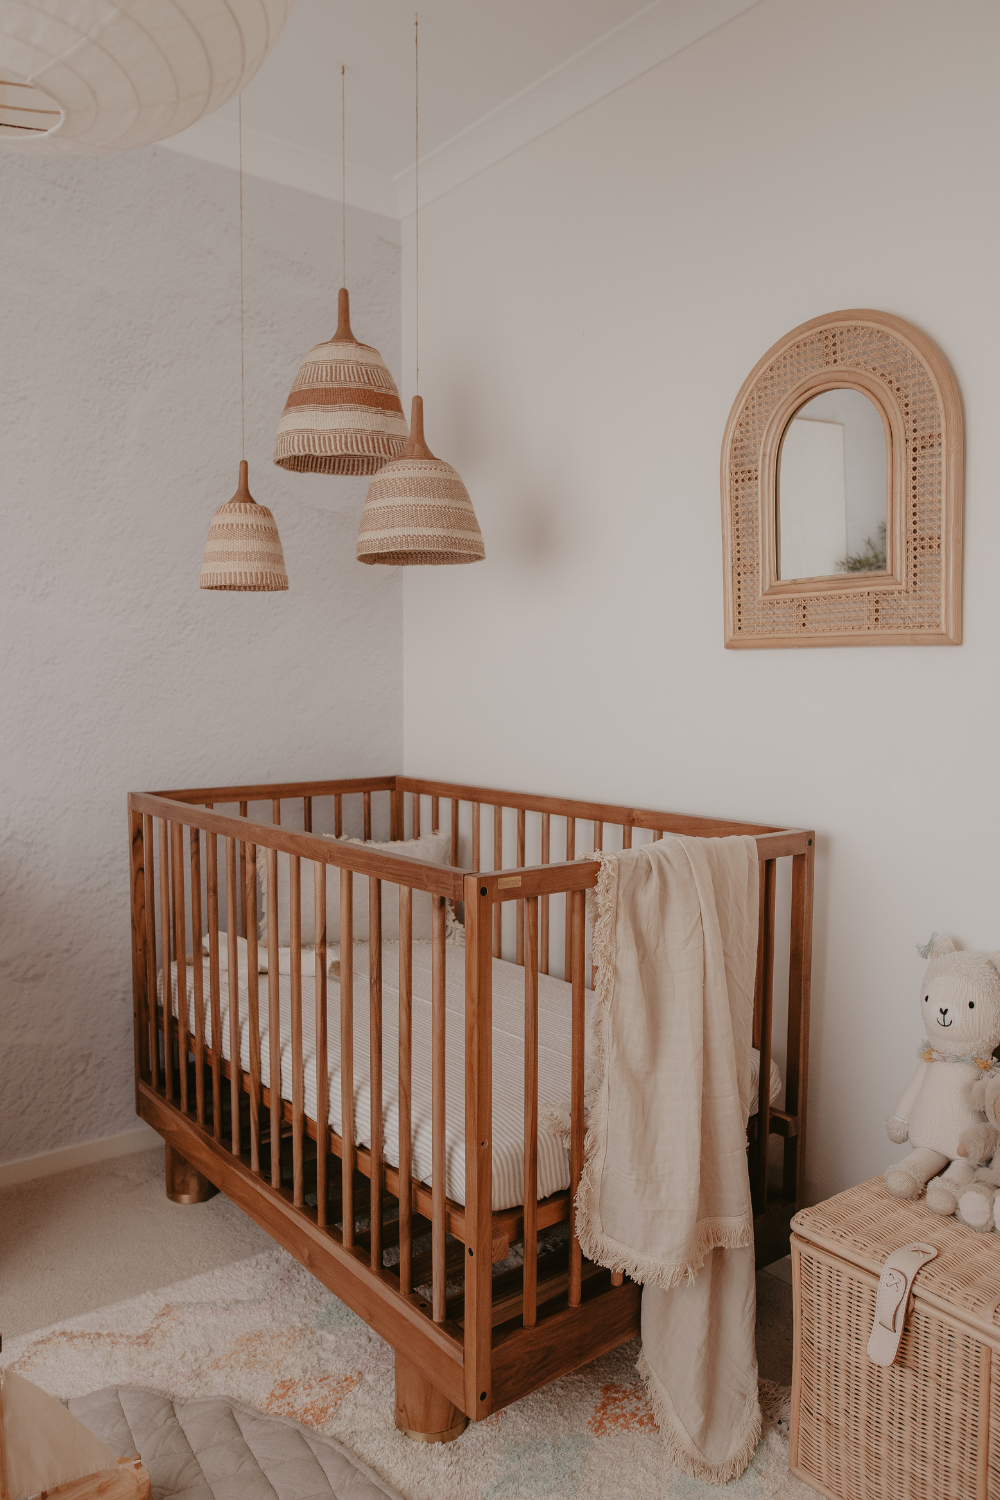 baby cot neutral tones wooden